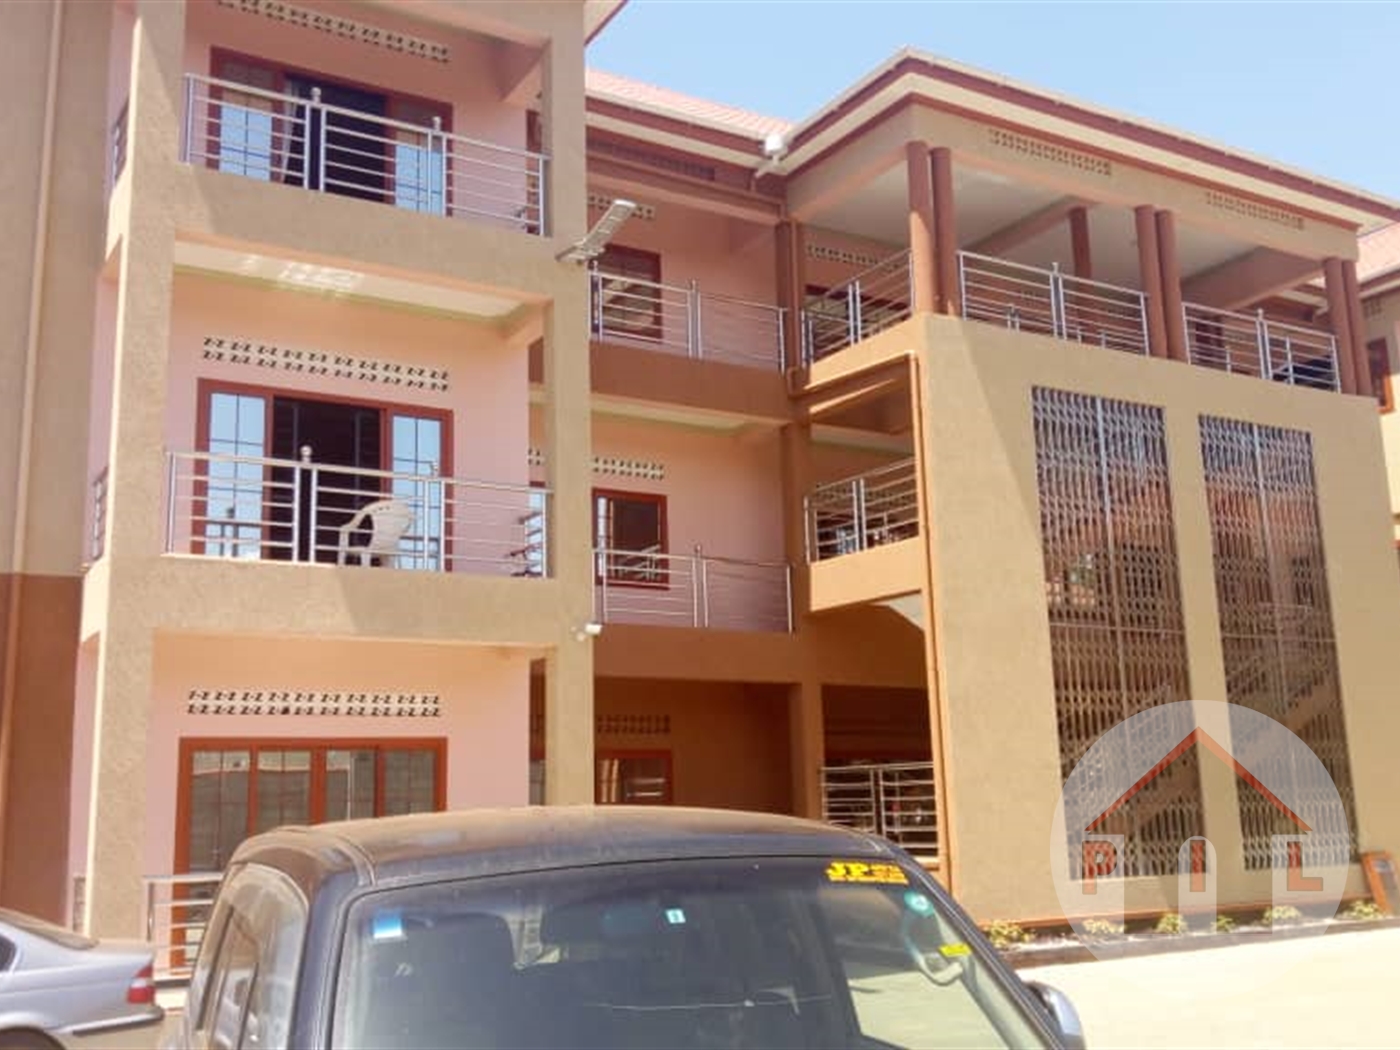 Apartment block for sale in Bulange Kampala